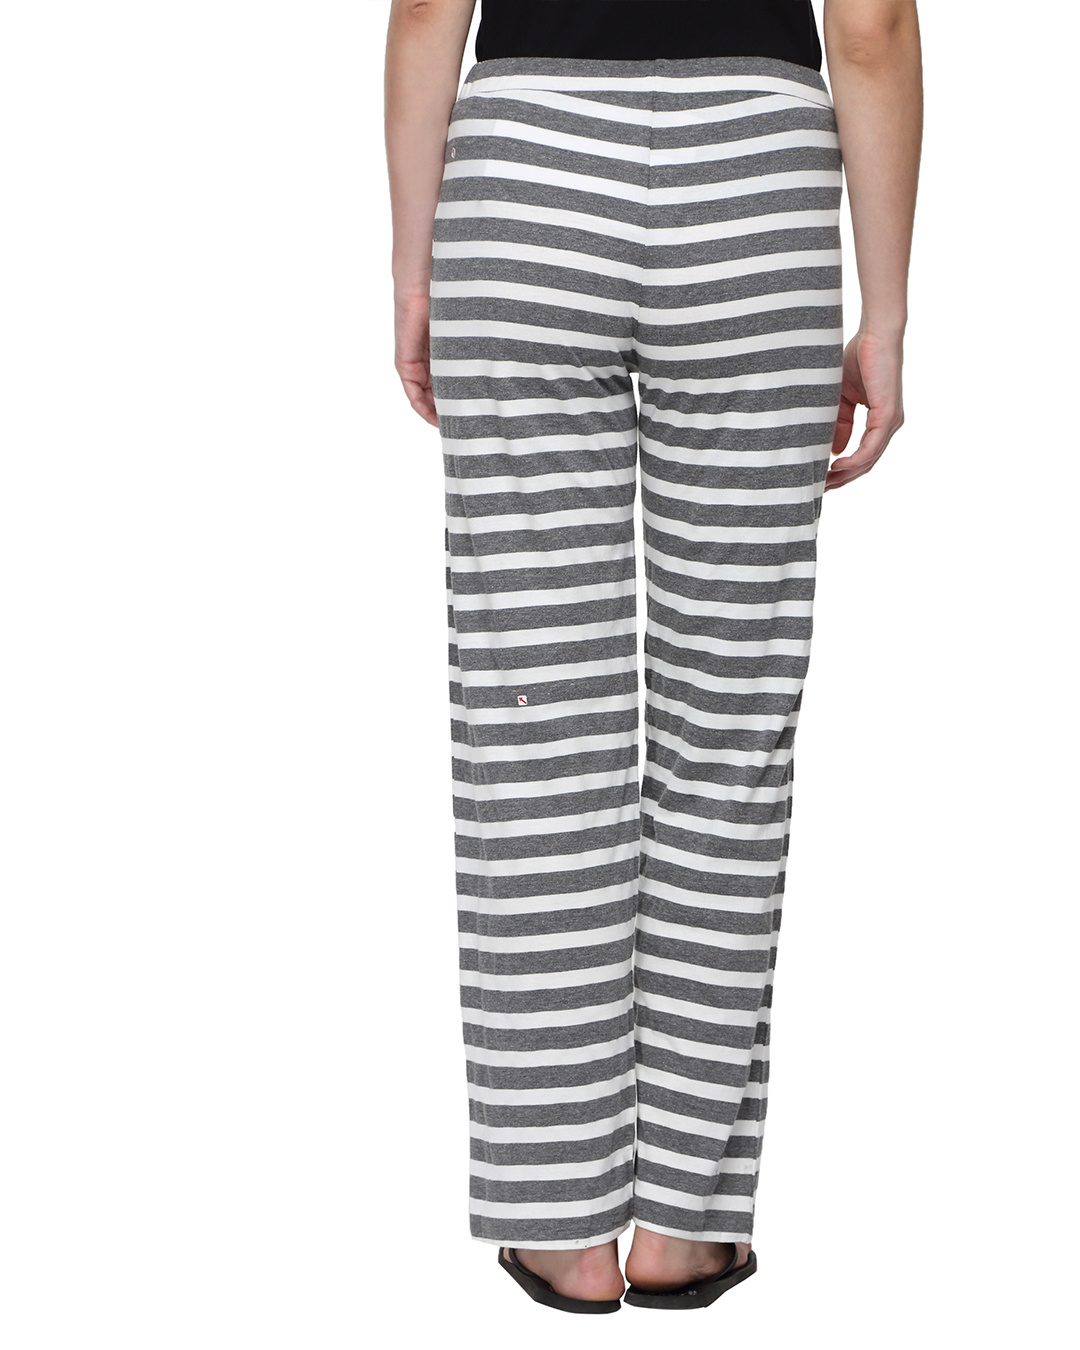 Shop Slumber Jill Women's Pyjamas (Pack of 1)-Back